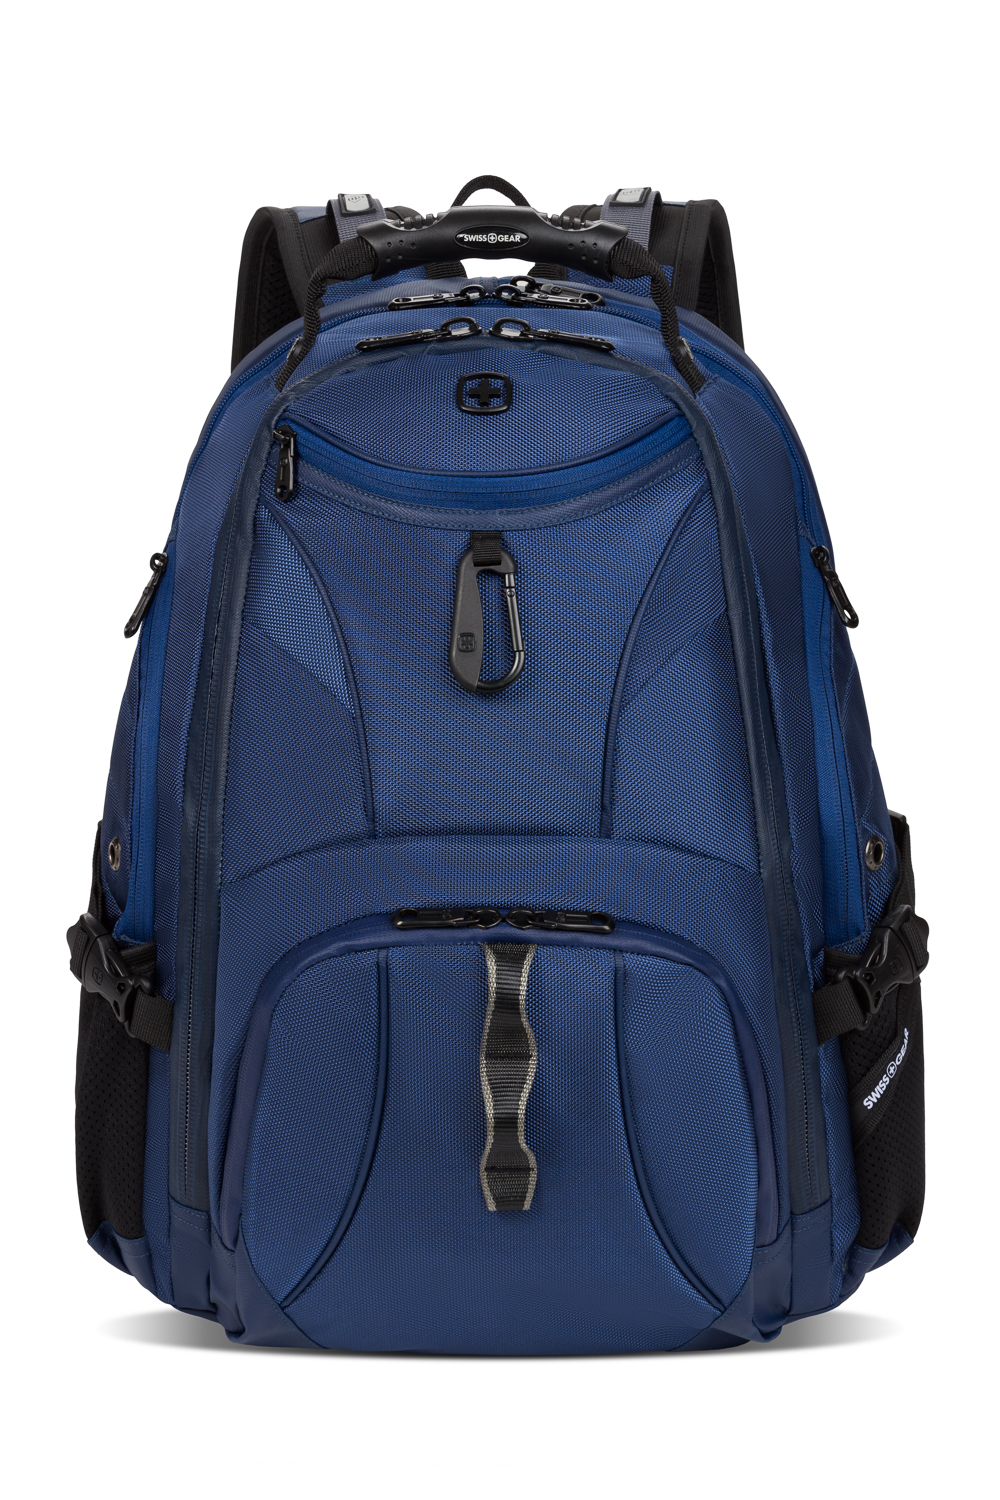 SWISSGEAR 1900 ScanSmart Laptop Backpack - Ballistic Navy Blue